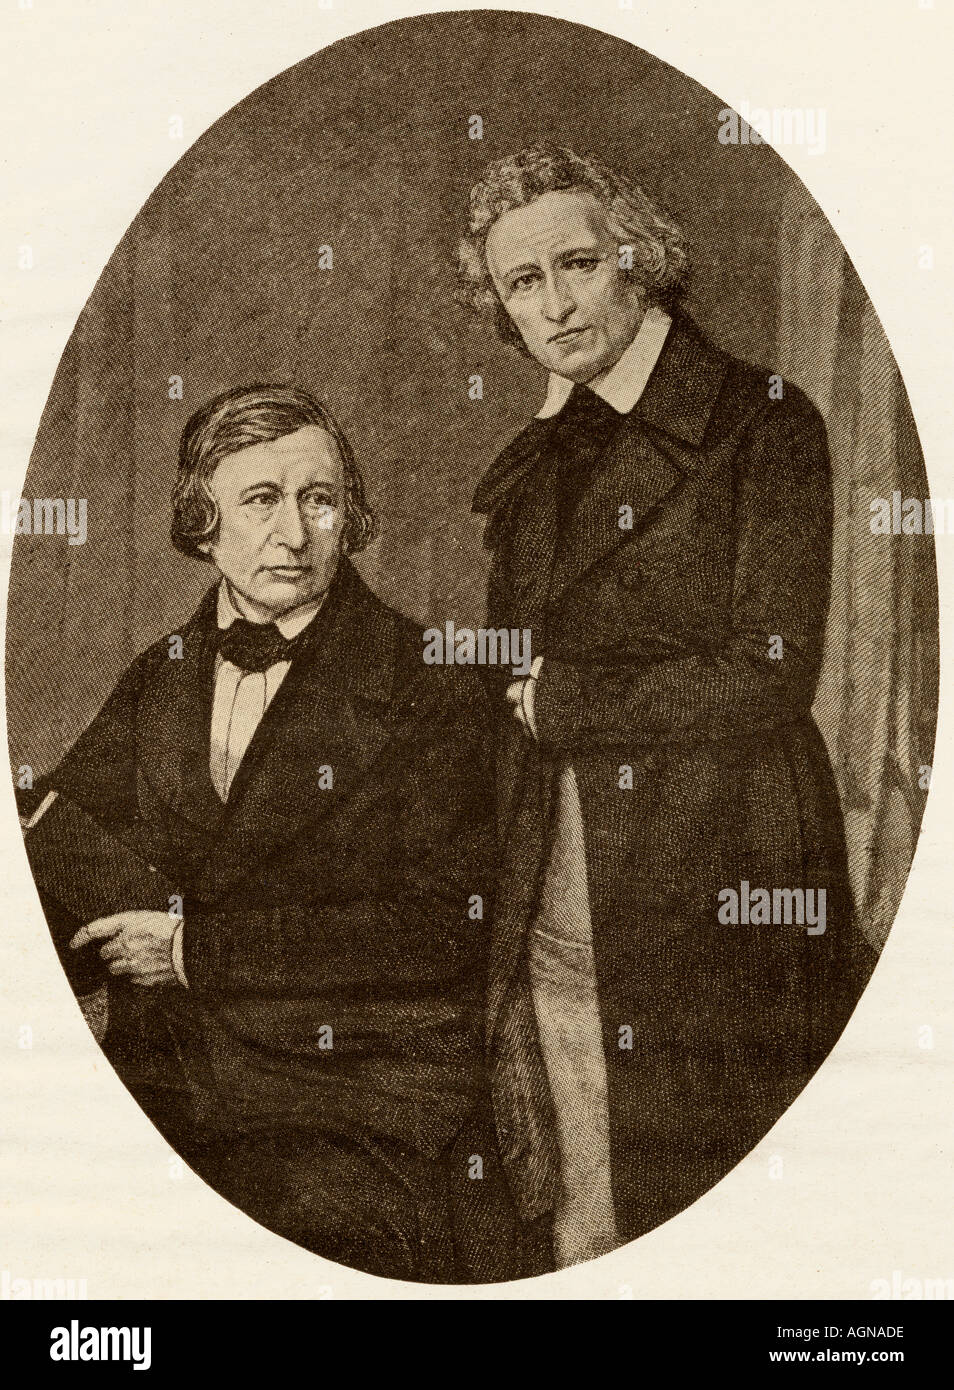 Fratelli Grimm. Jacob Ludwig Karl Grimm, 1785 -1863 e Karl Wilhelm Grimm, 1786-1859. Foto Stock